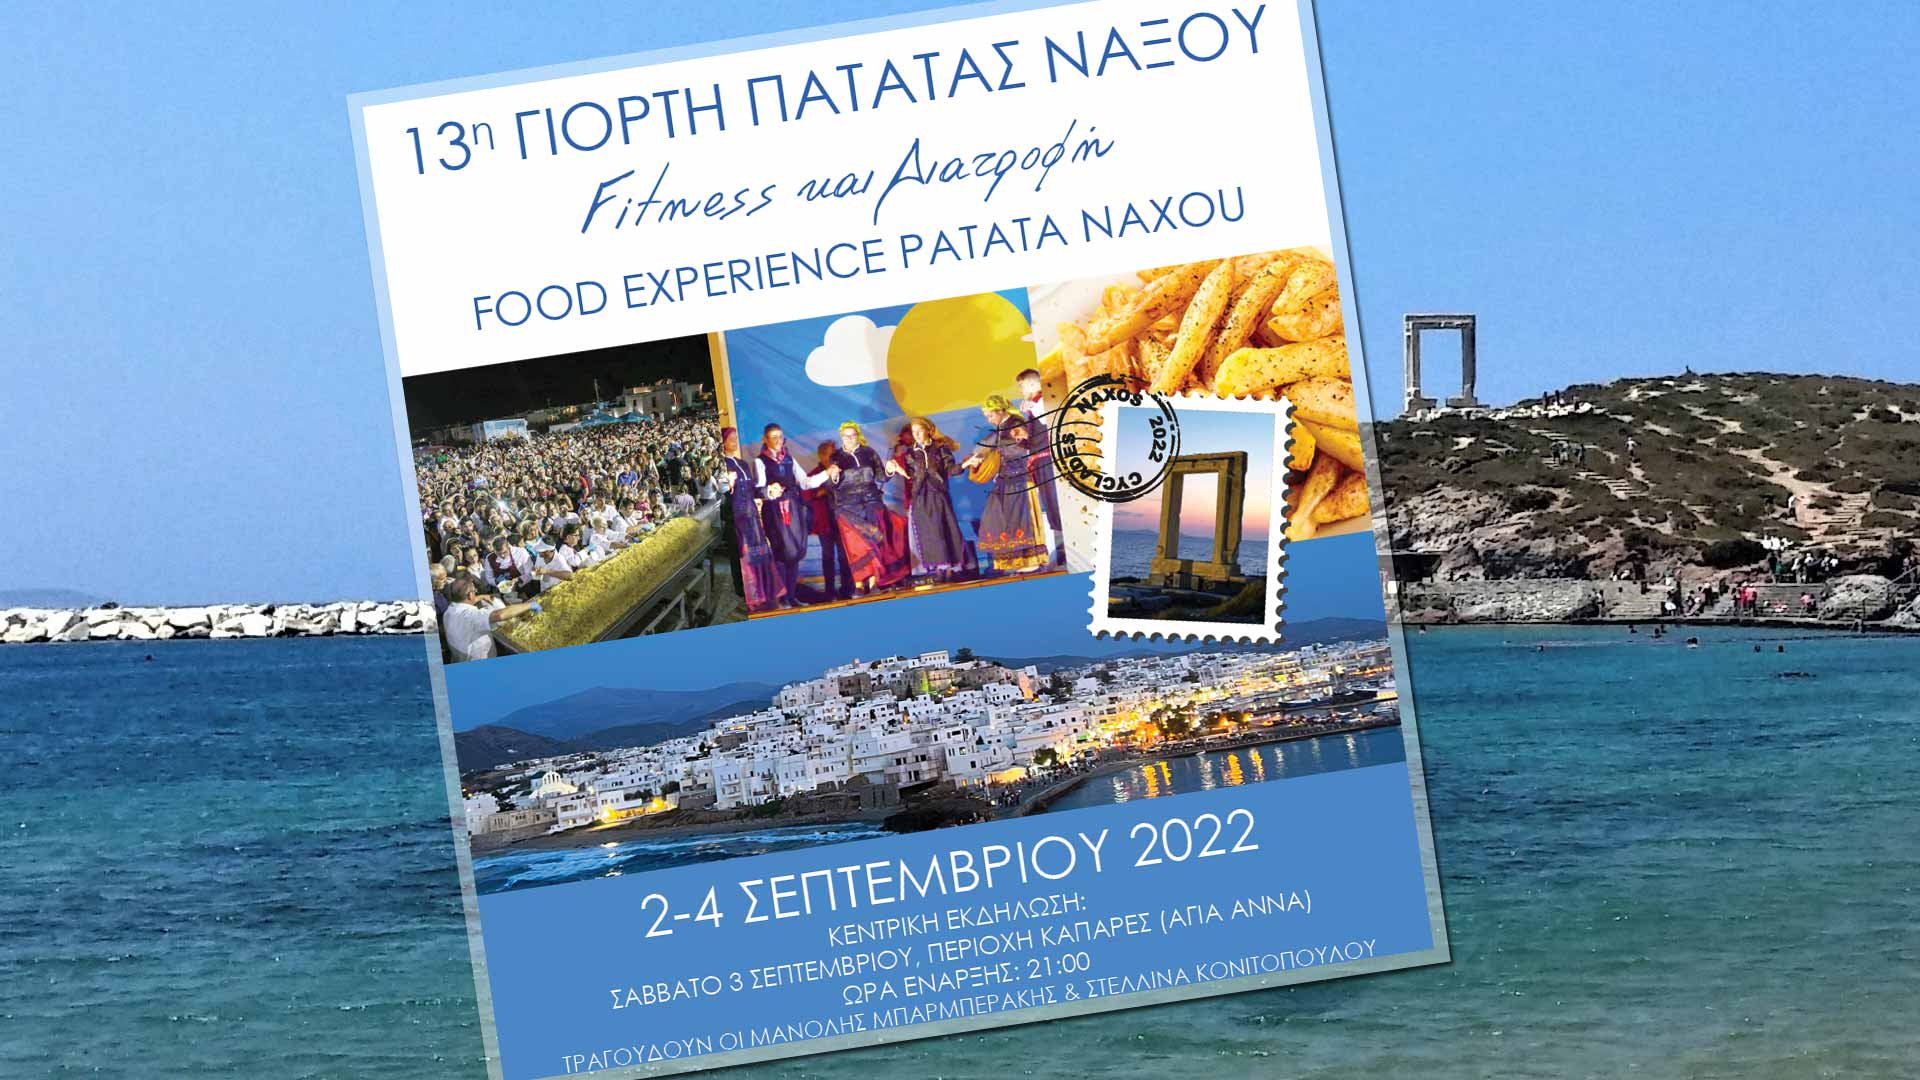 Food Experience Patata Naxos 2022: 13η Γιορτή Πατάτας Νάξου - Fitness και Διατροφή